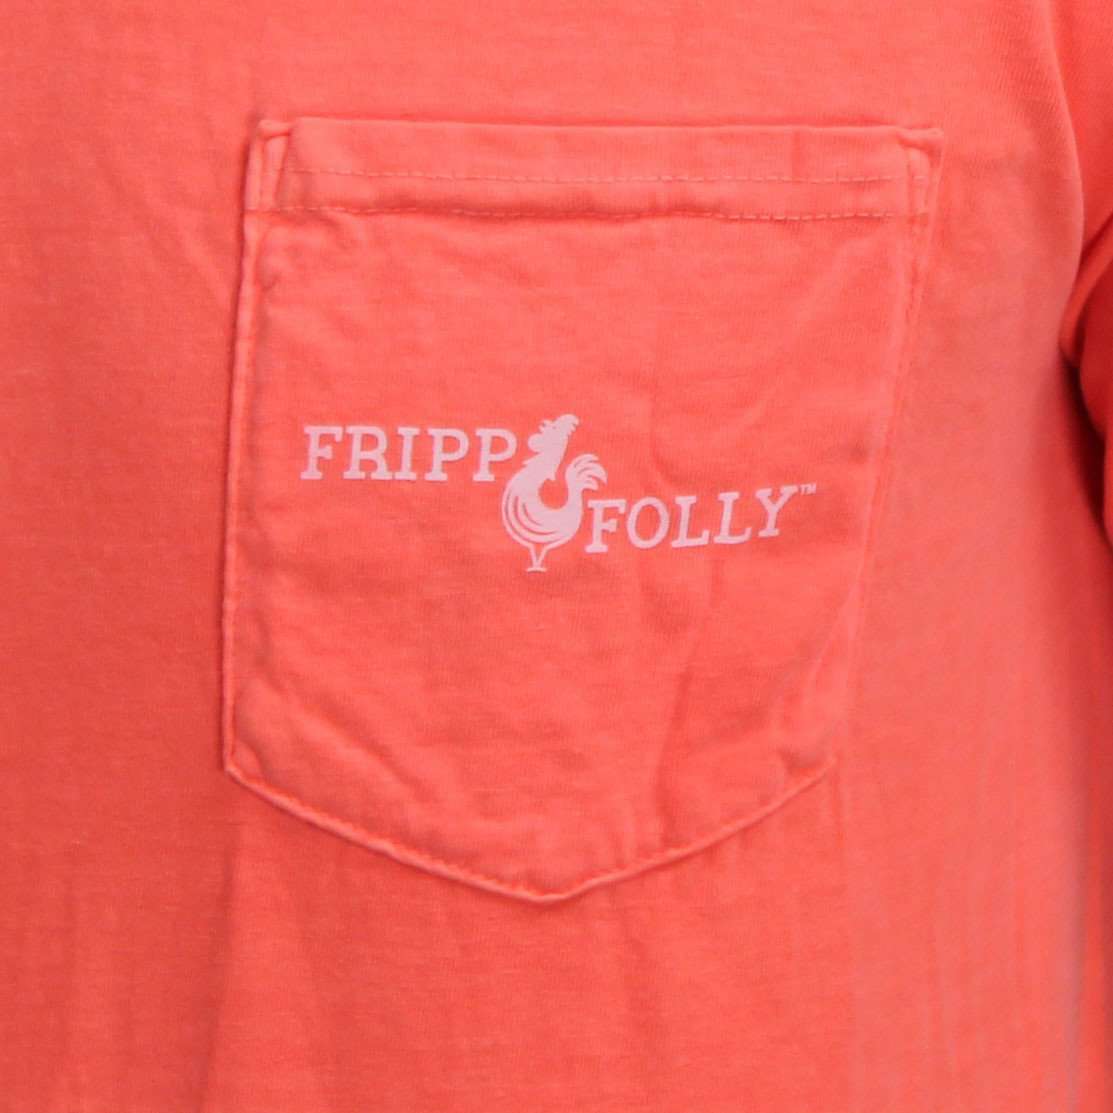 Mallard Tee in Neon Red Orange by Fripp & Folly - Country Club Prep